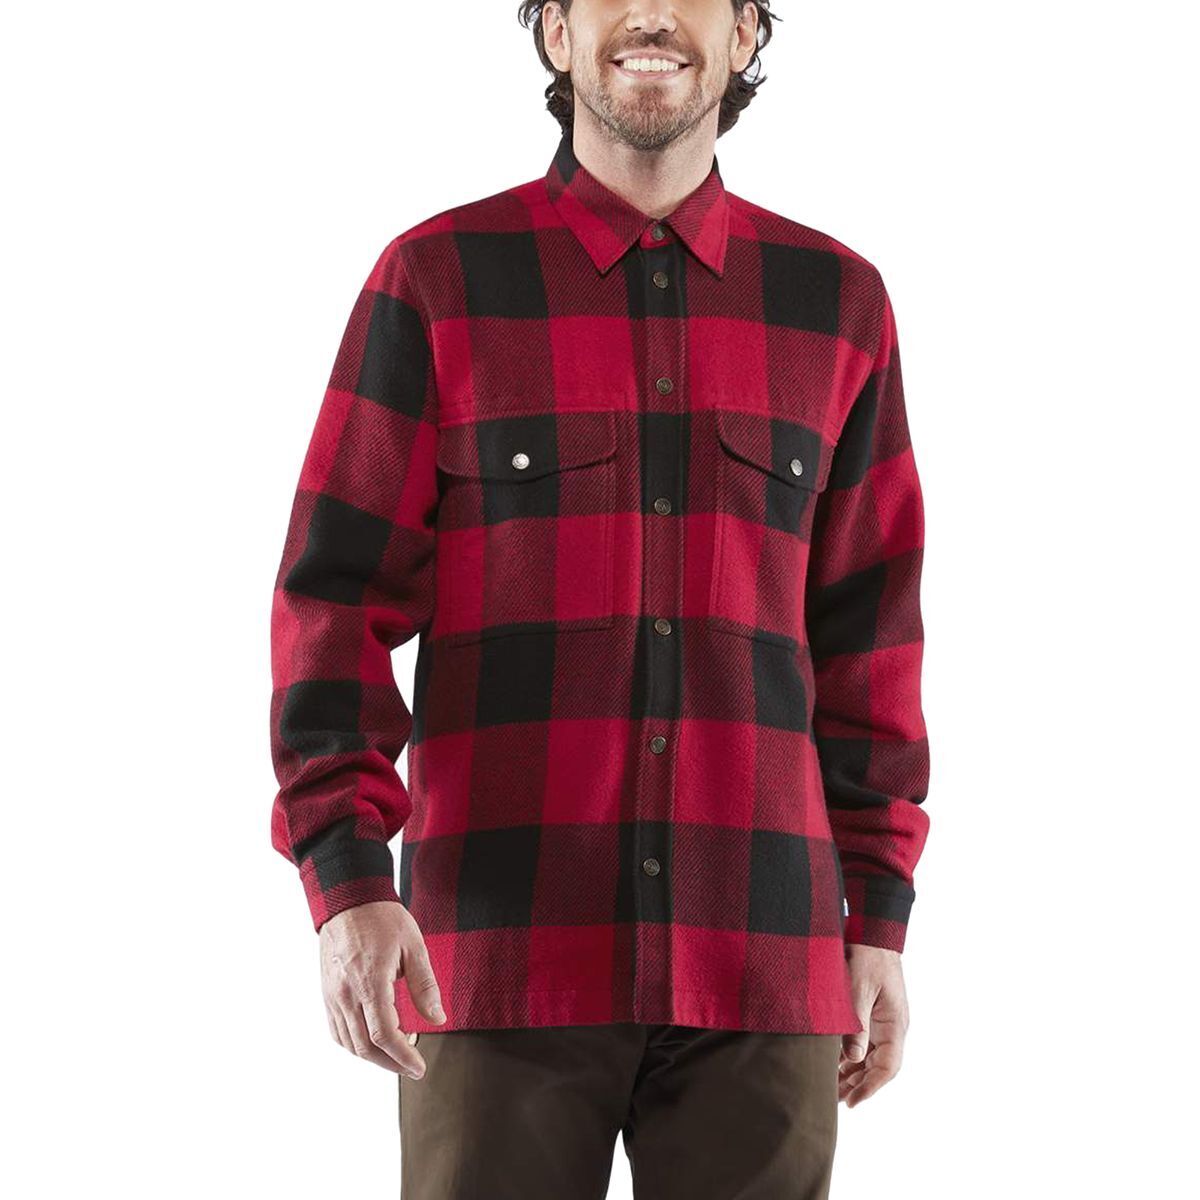 Fjallraven Canada Shirt Jacket - Men's